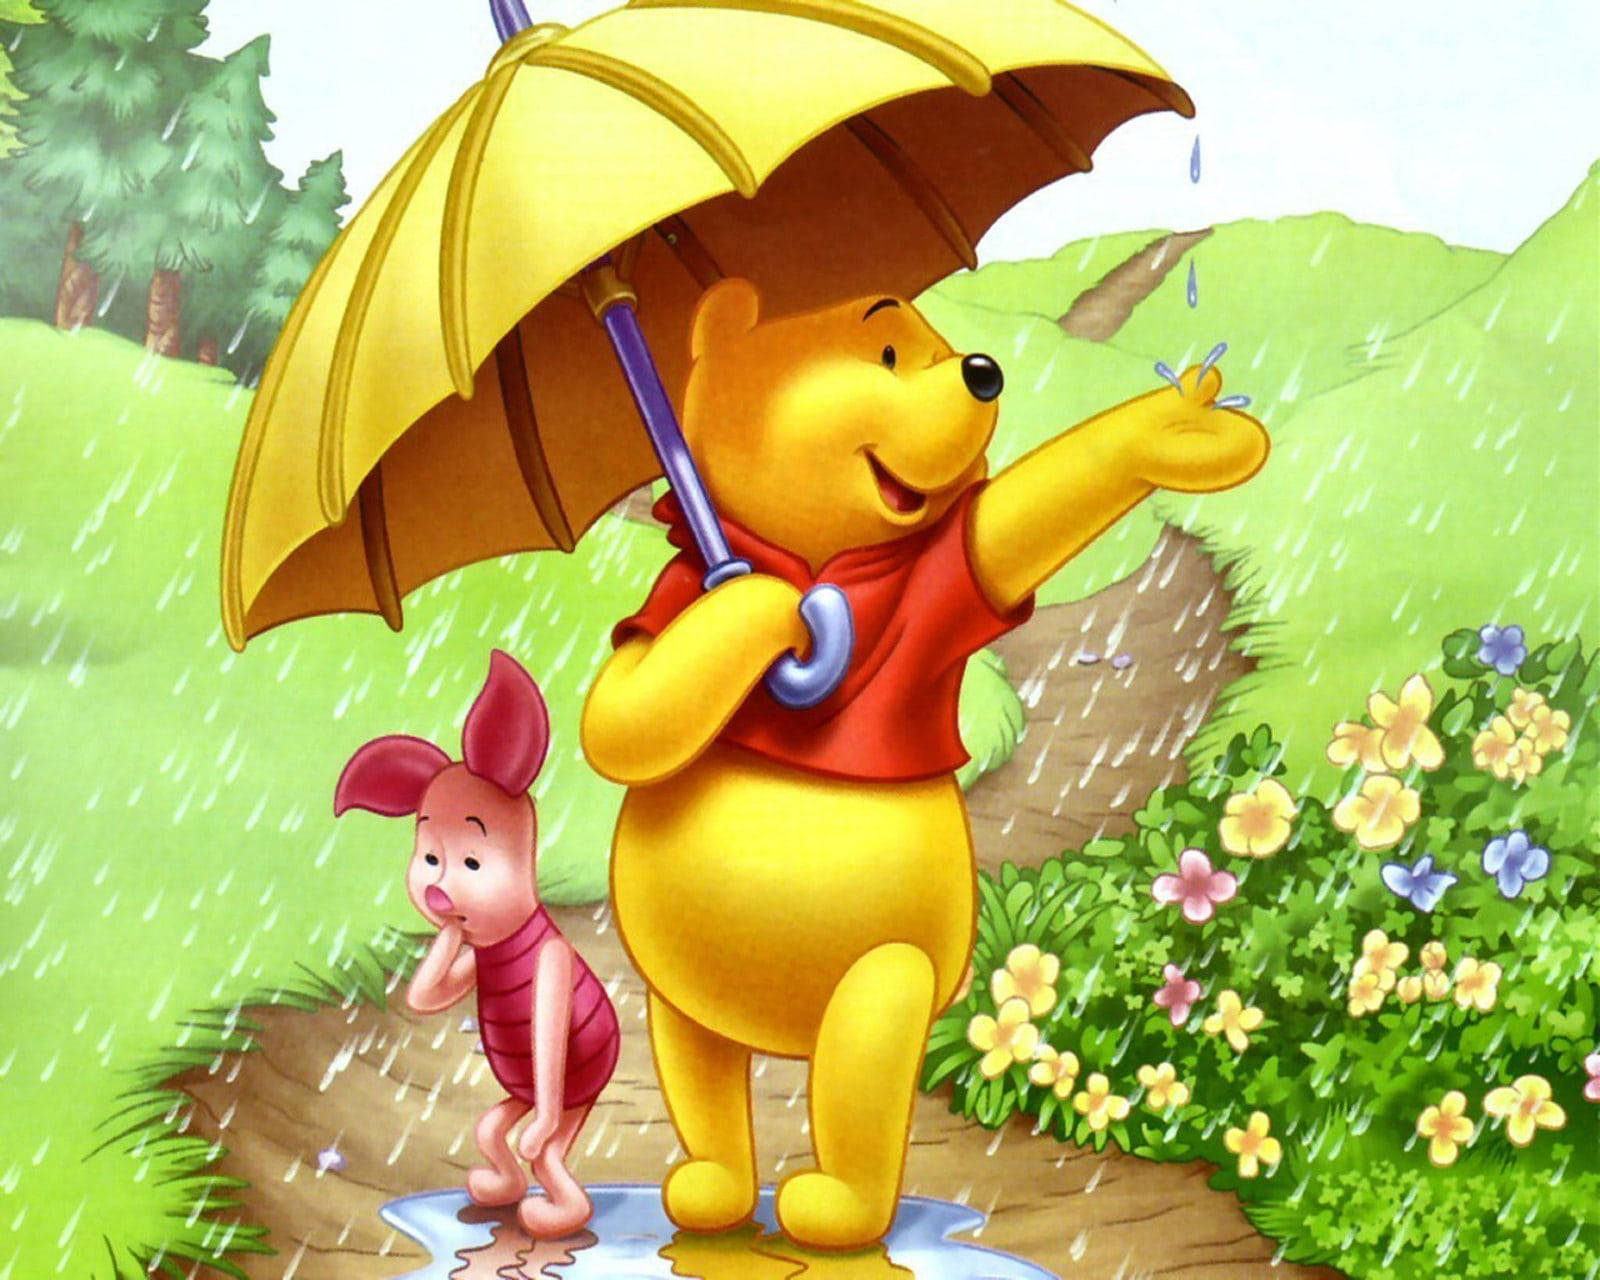 Cute Winnie The Pooh With Umbrella